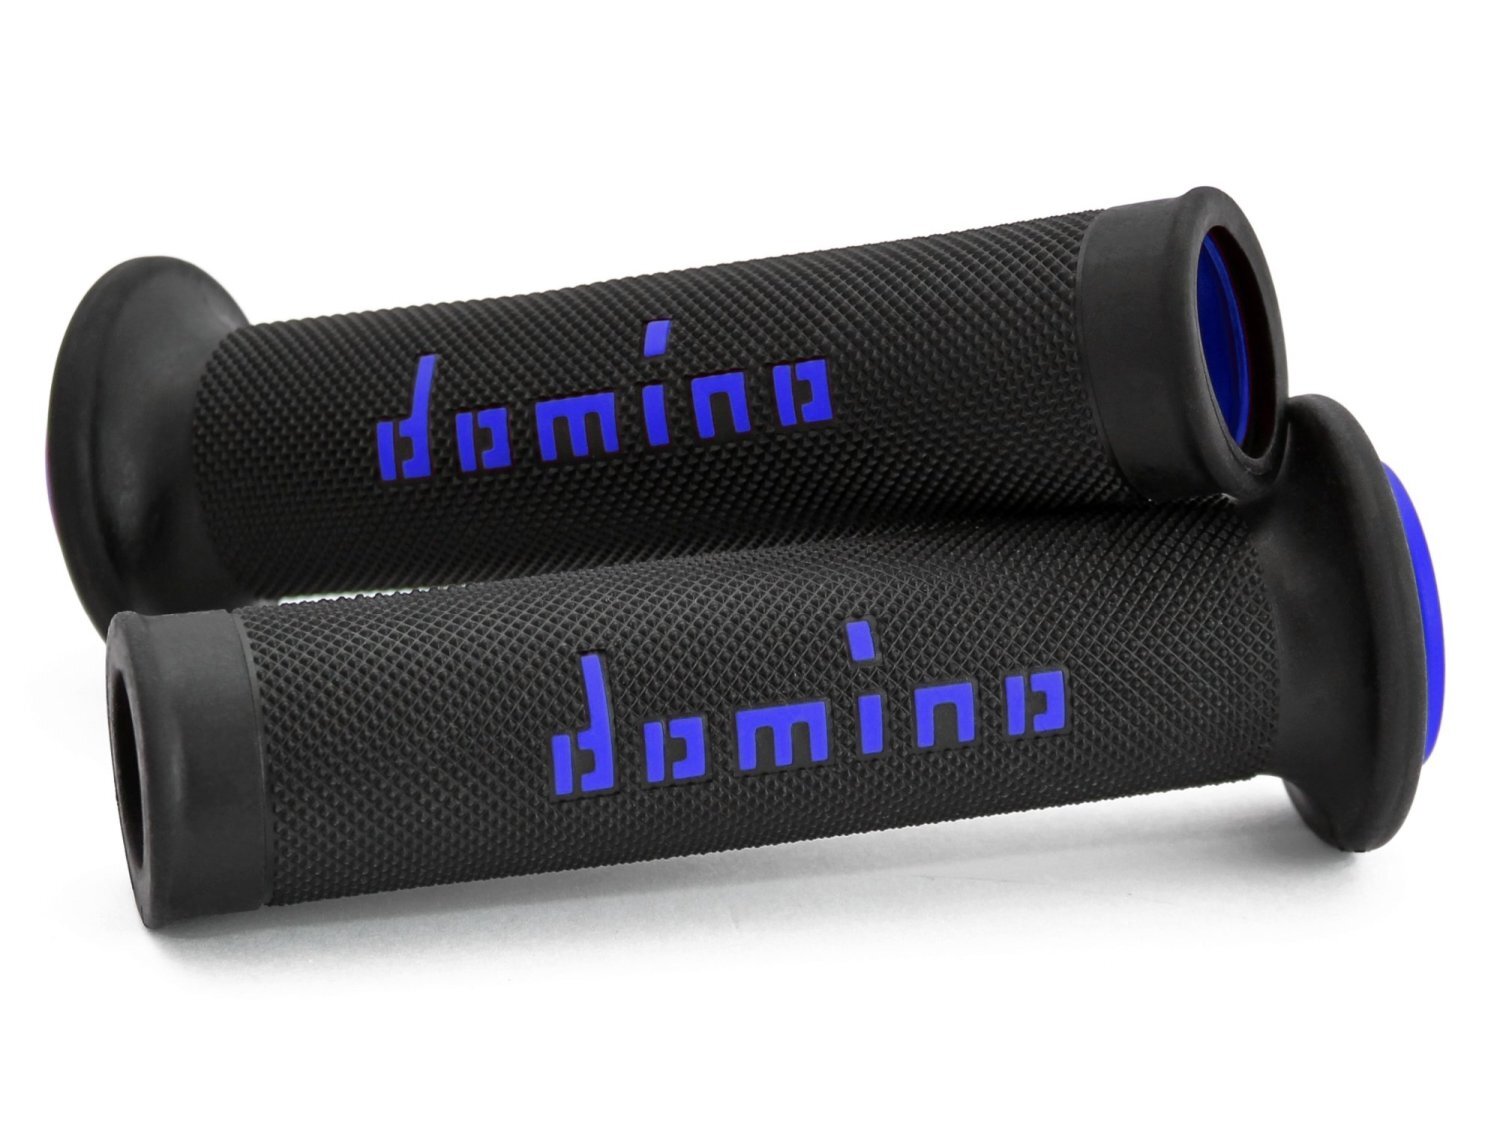 DOMINO GRIPS ROAD A010 SLIM BLACK BLUE